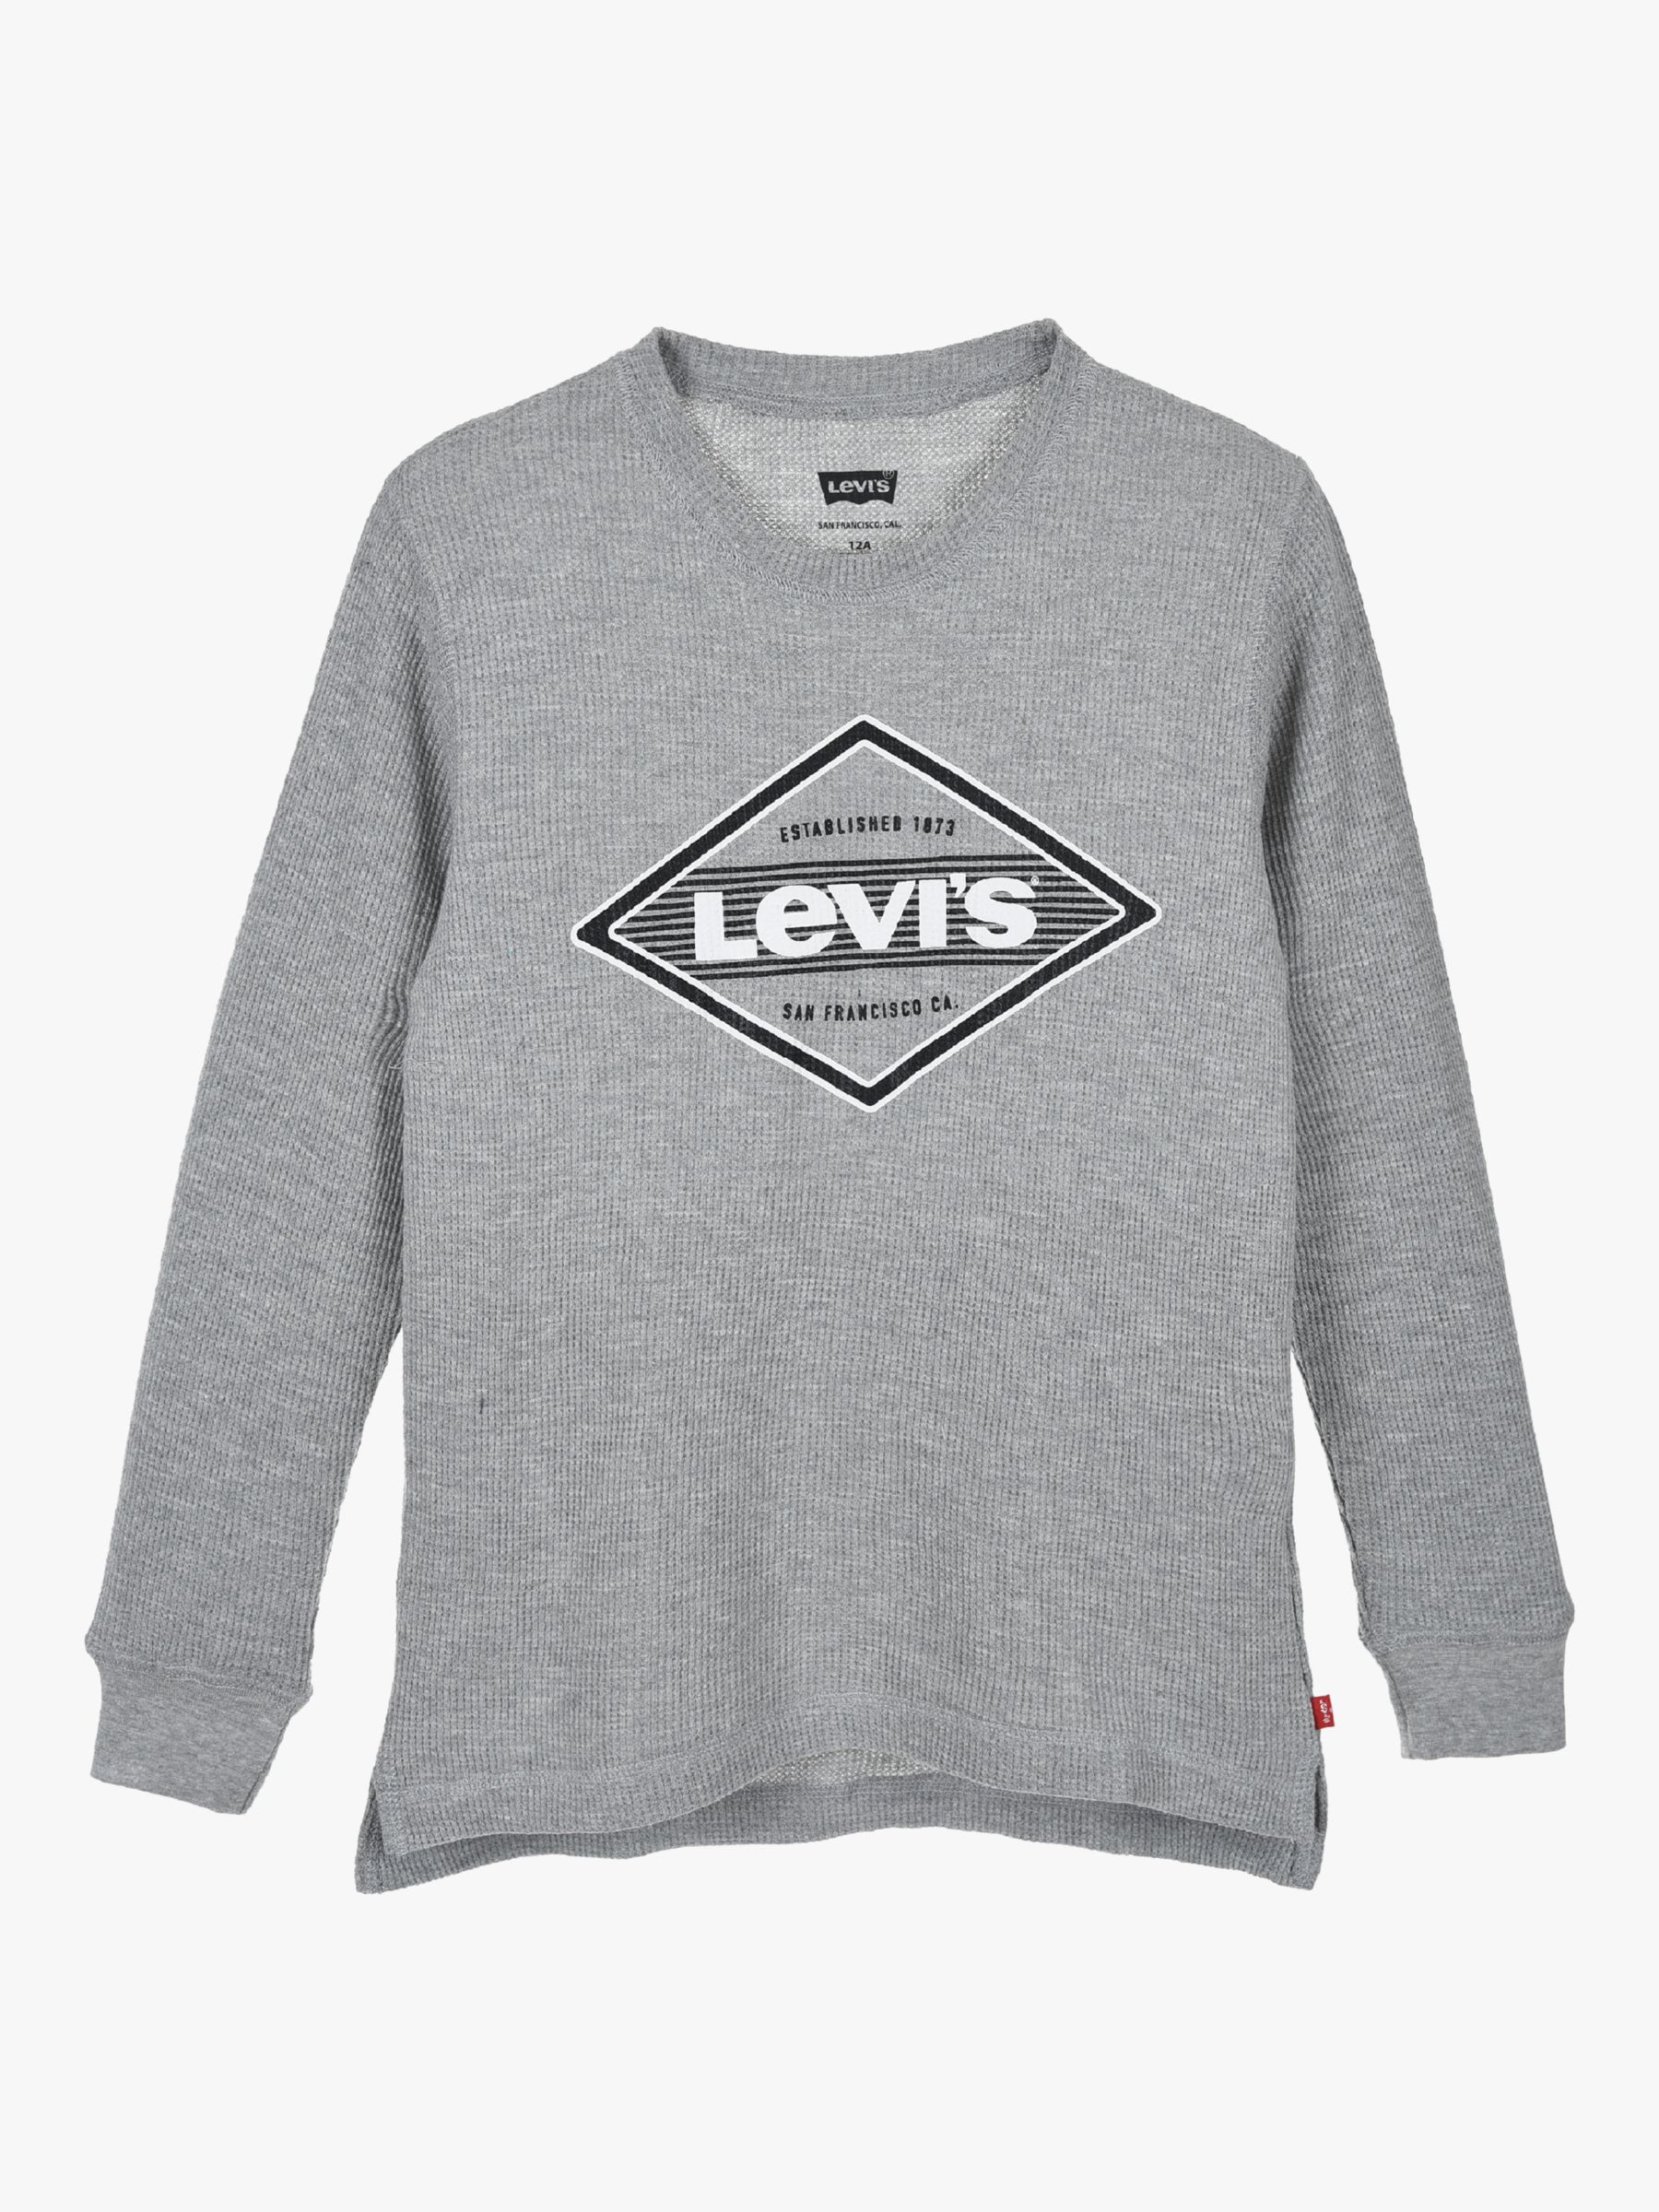 Image of Levis Boys Thermal Long Sleeve TShirt Grey